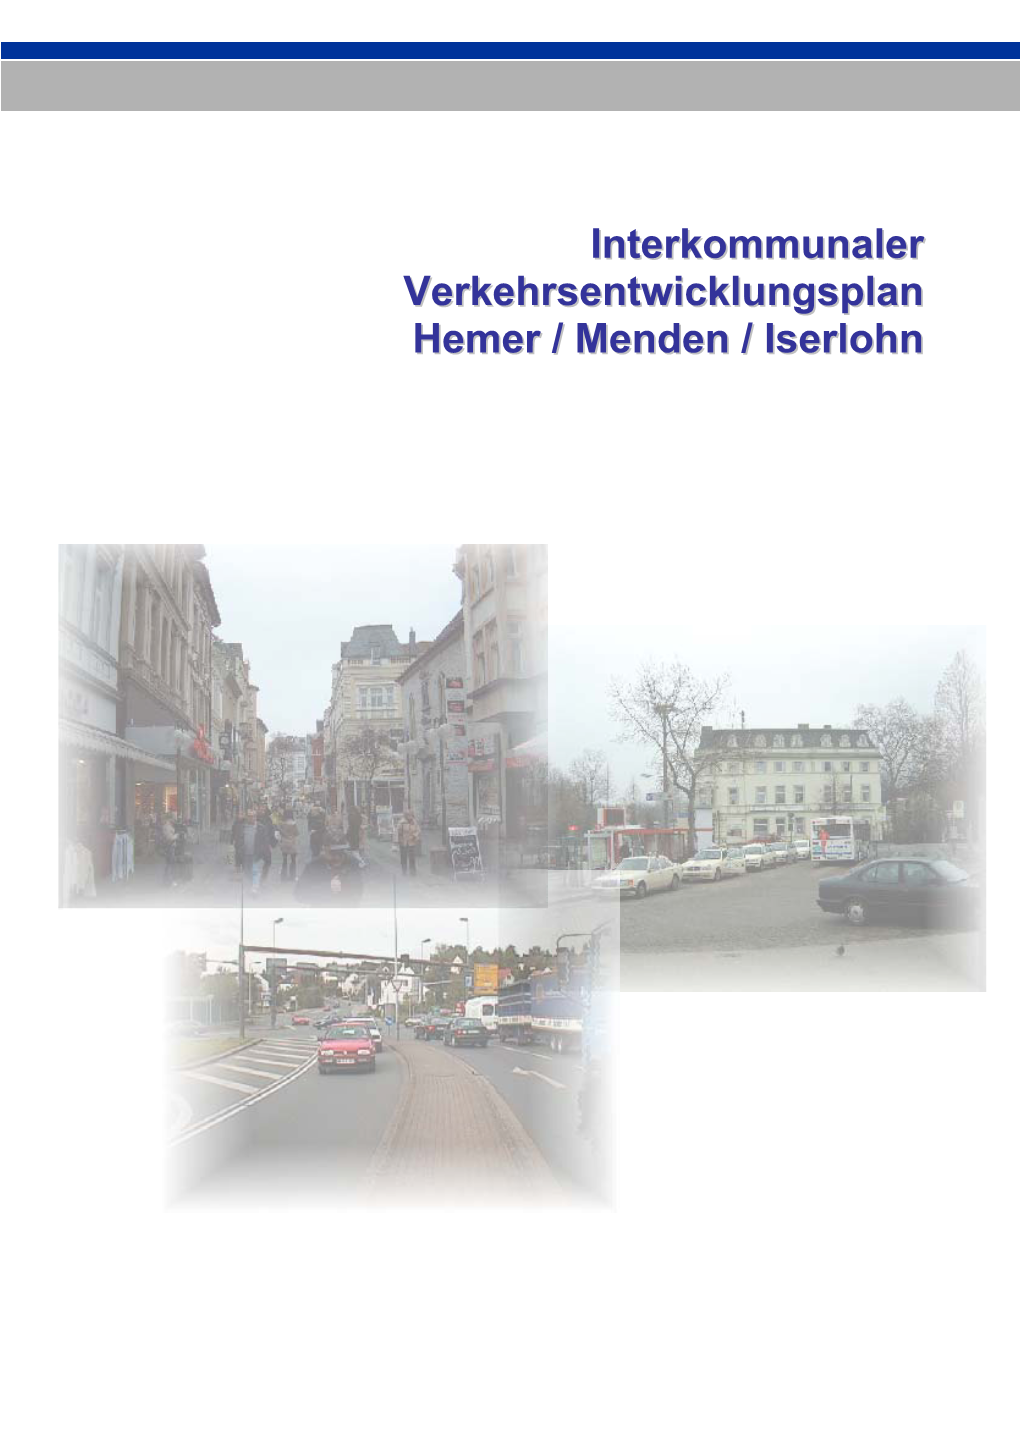 Interkommunaler Verkehrsentwicklungsplan Hemer / Menden / Iserlohn